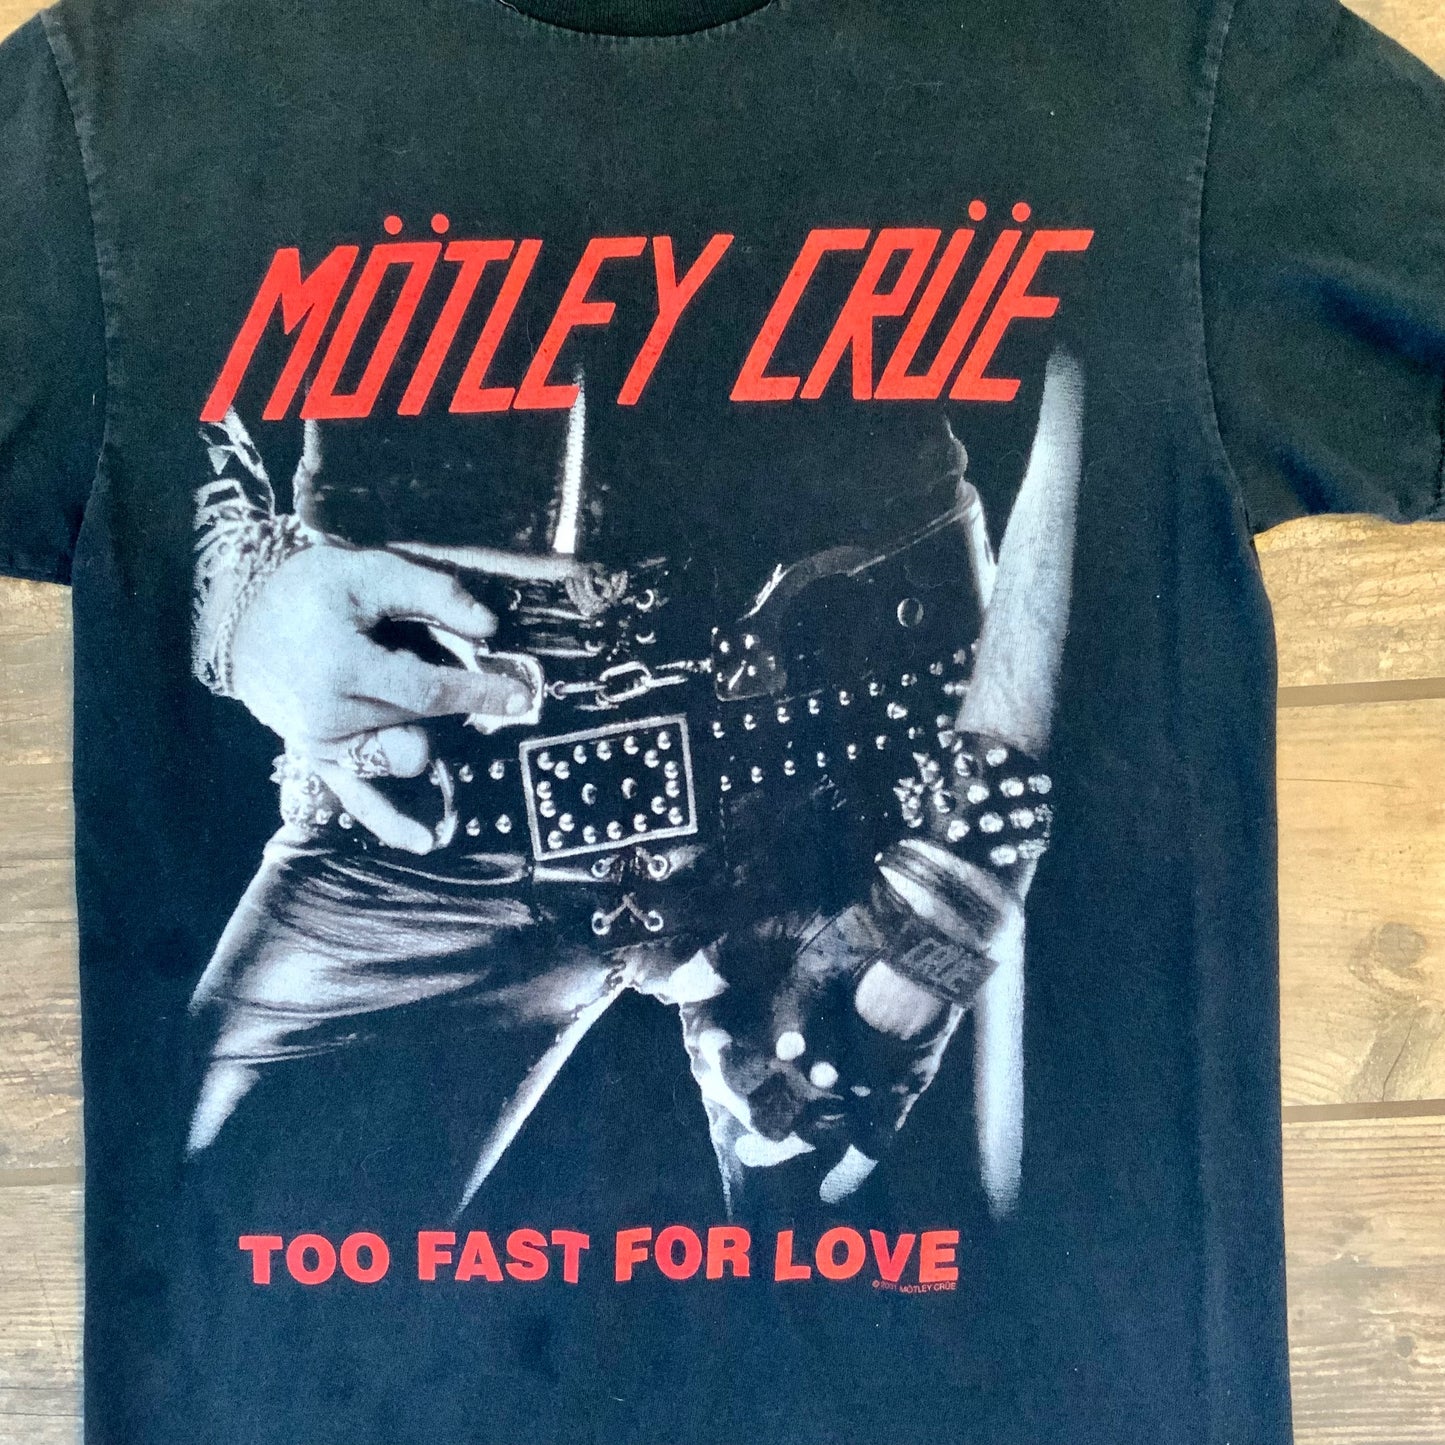 2001 Motley Crue Tee "Too Fast for Love"